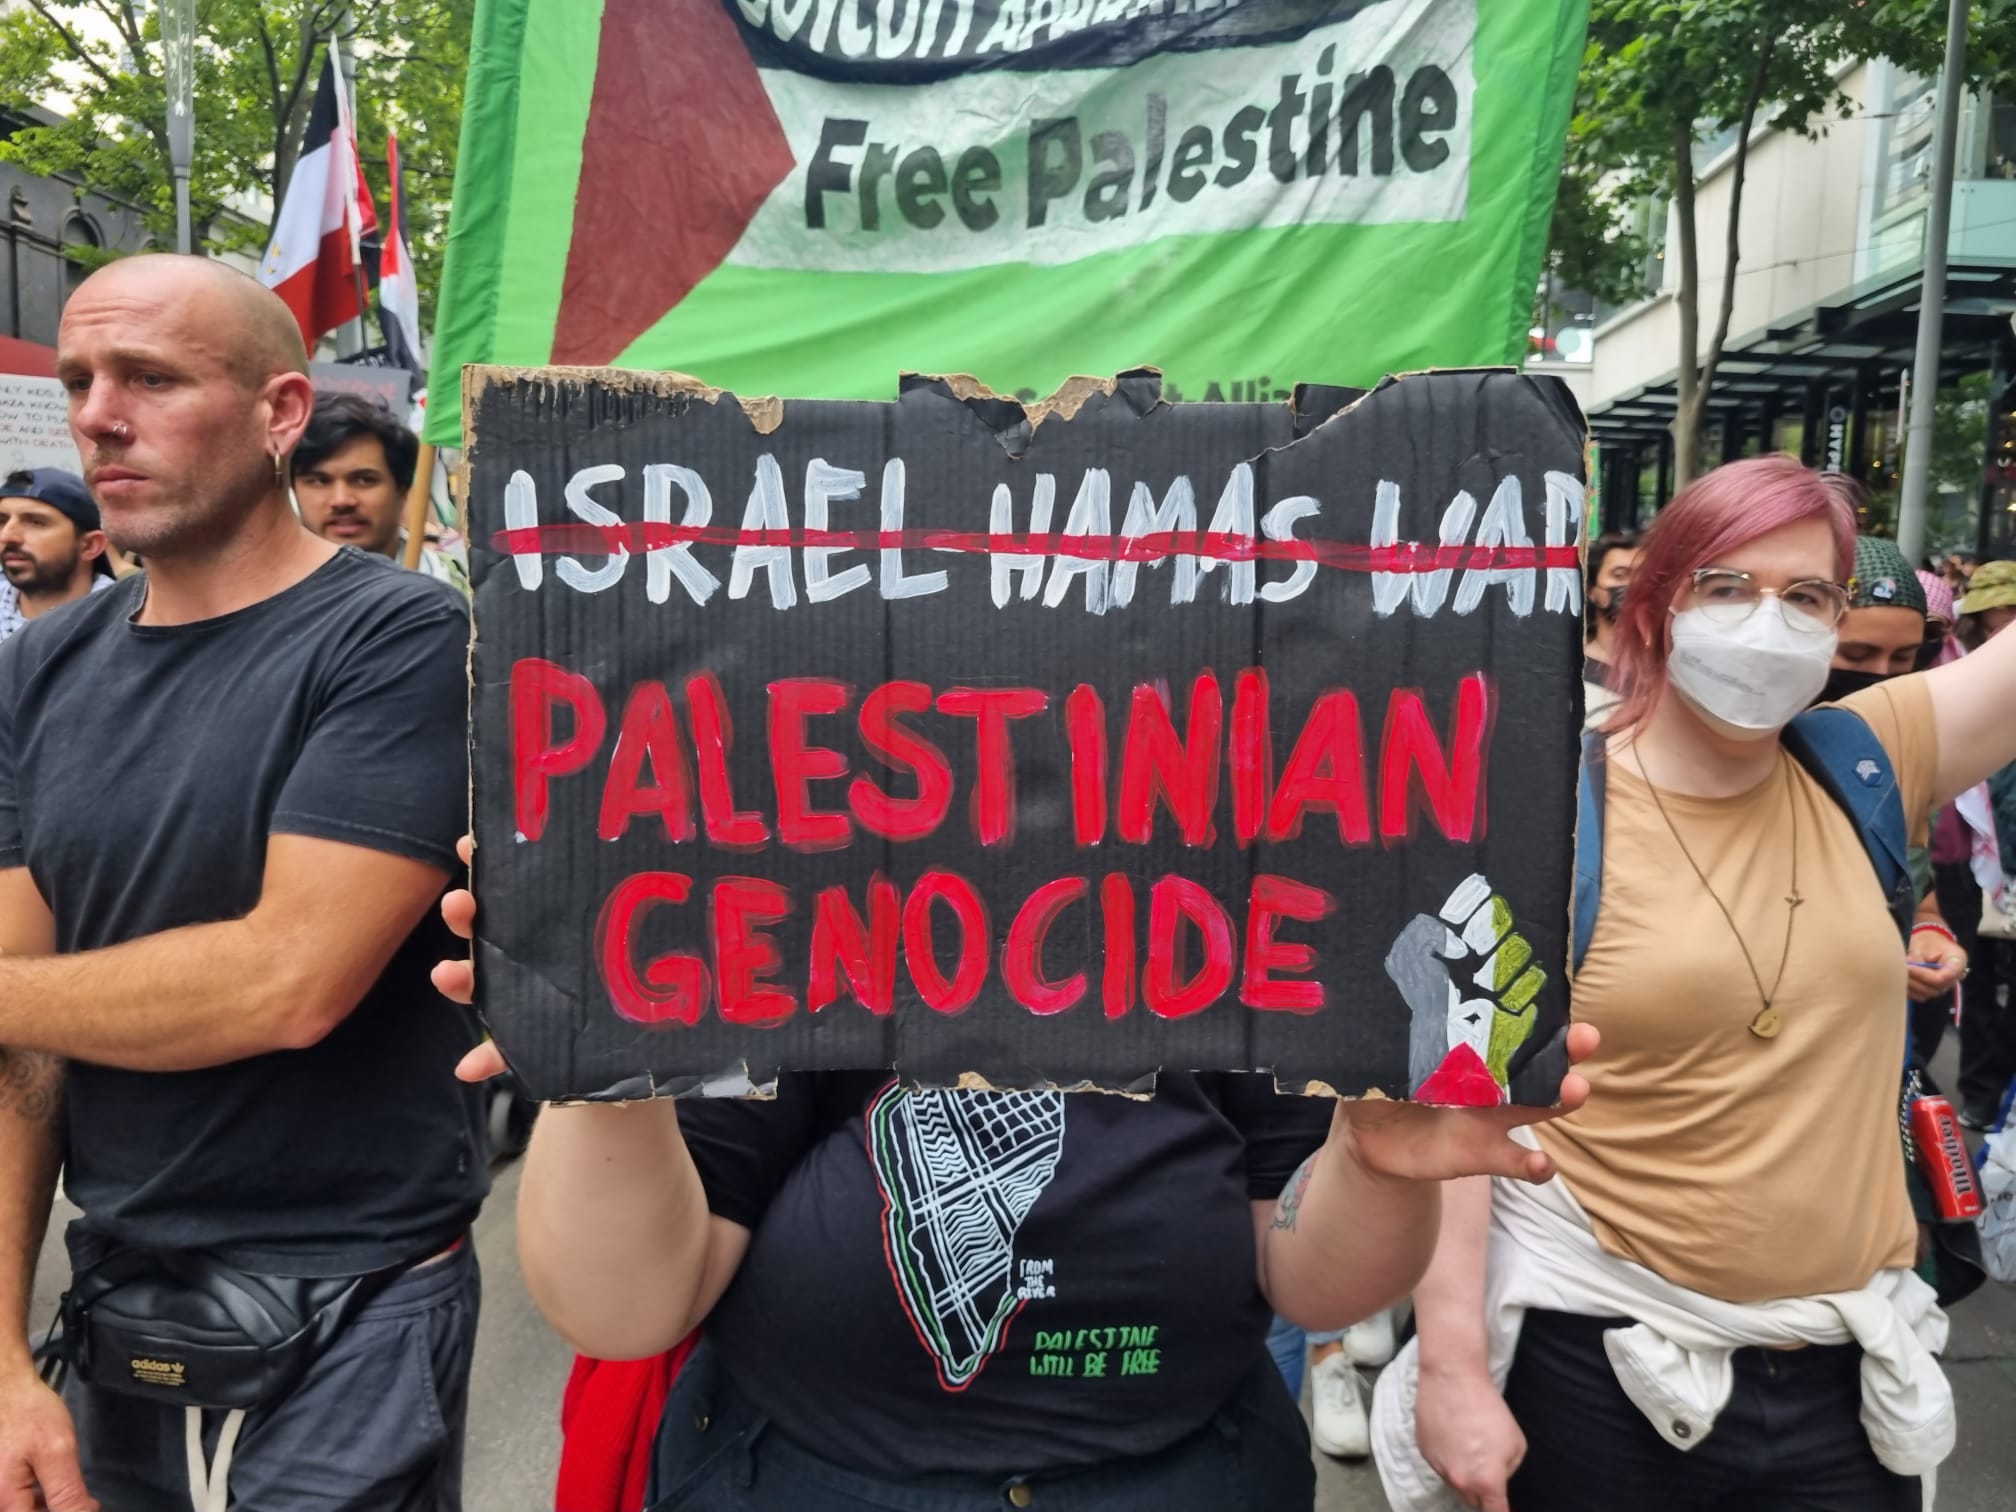 Palestinian genocide, not Israeli-Hamas war, Naarm/Melbourne, December 3